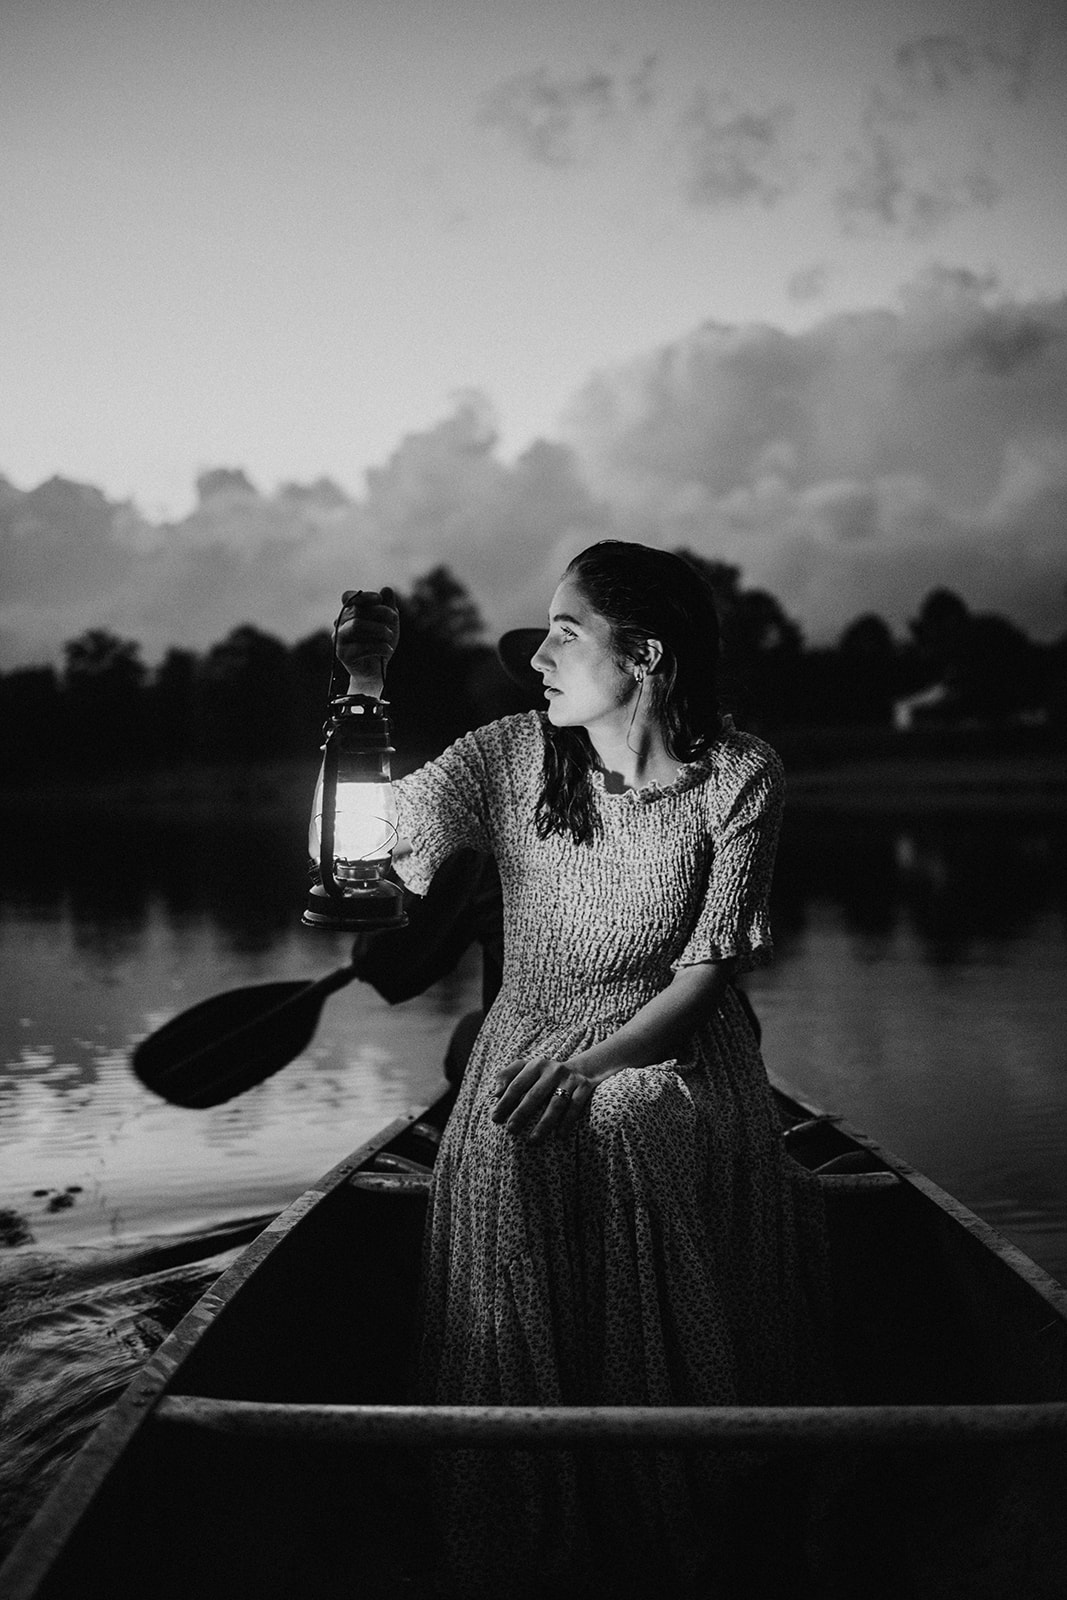 the wife holds a lantern as a couple photoshoot idea